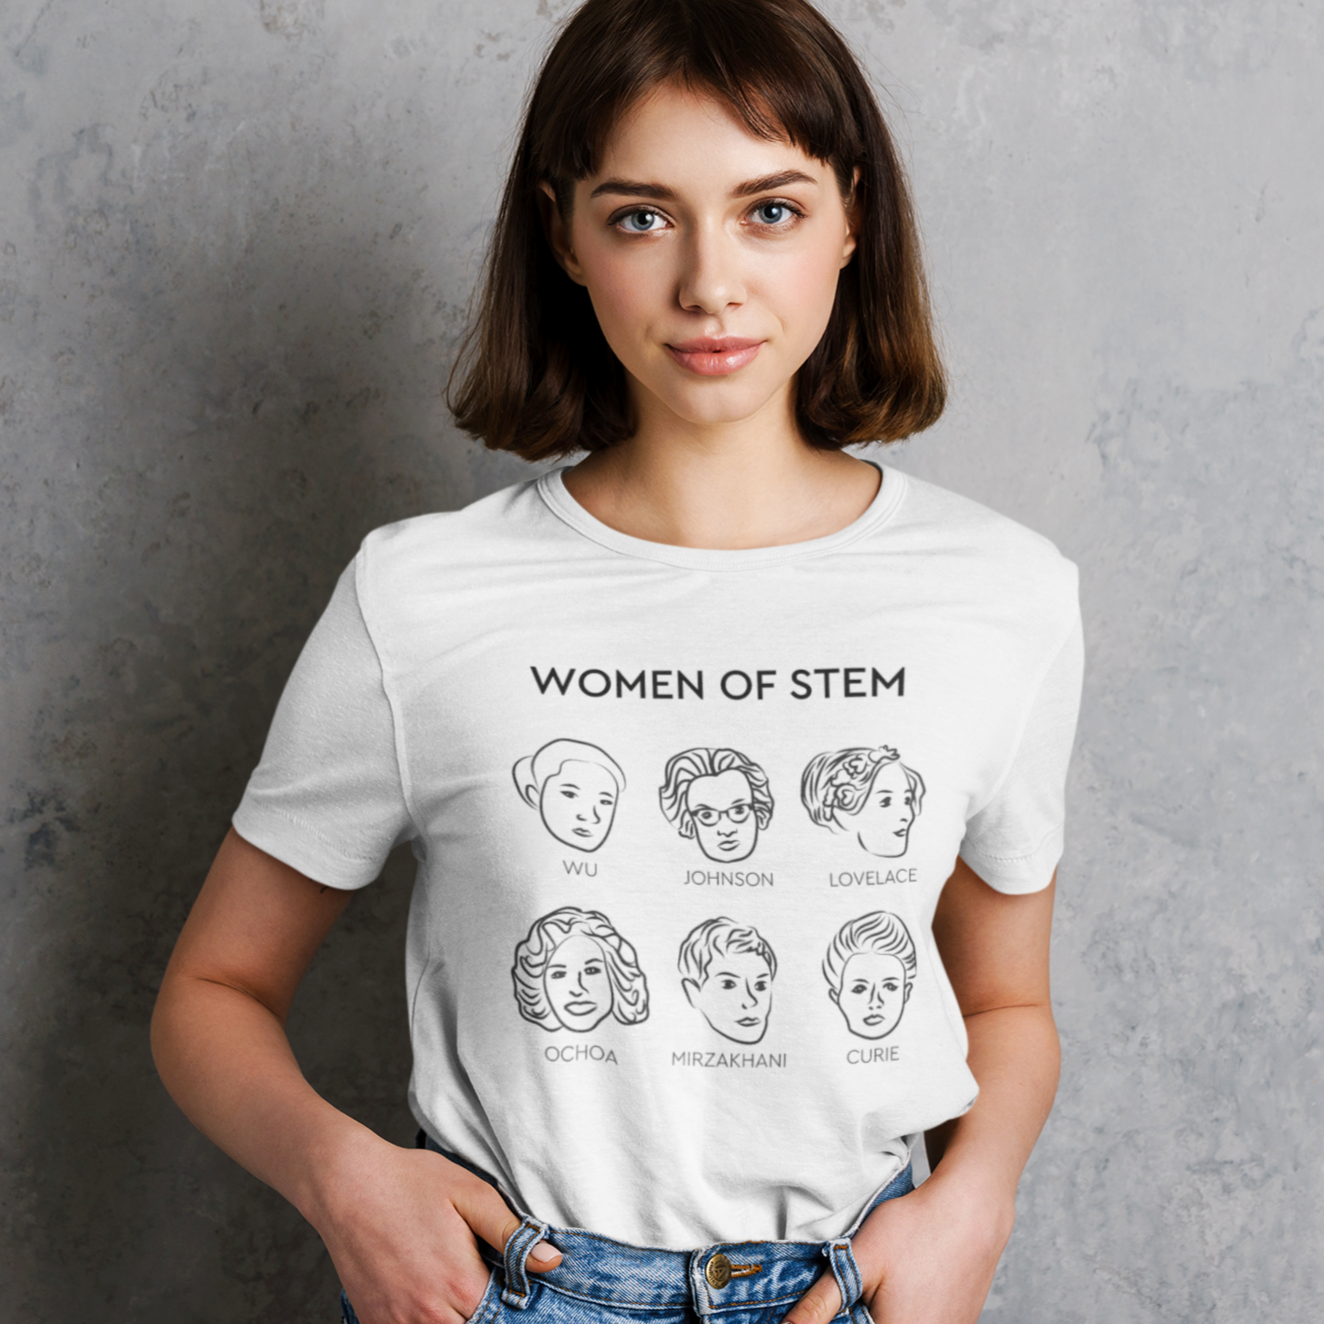 Person wearing Women of STEM t-shirt.